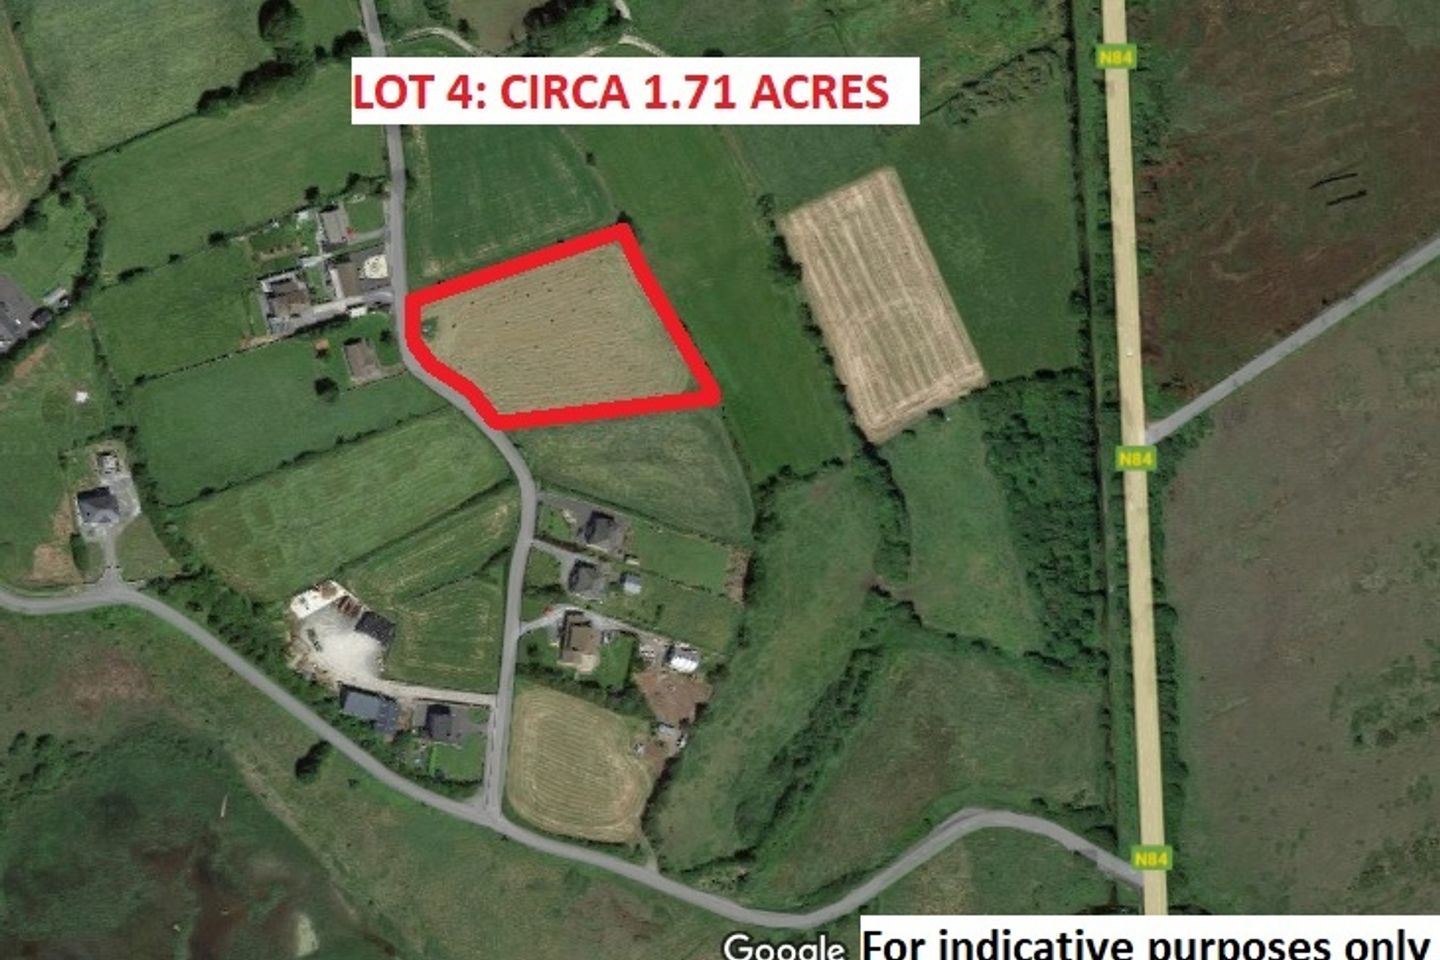 Lot 4 - circa 1.71 acres at Mace, Corrandulla, Co. Galway